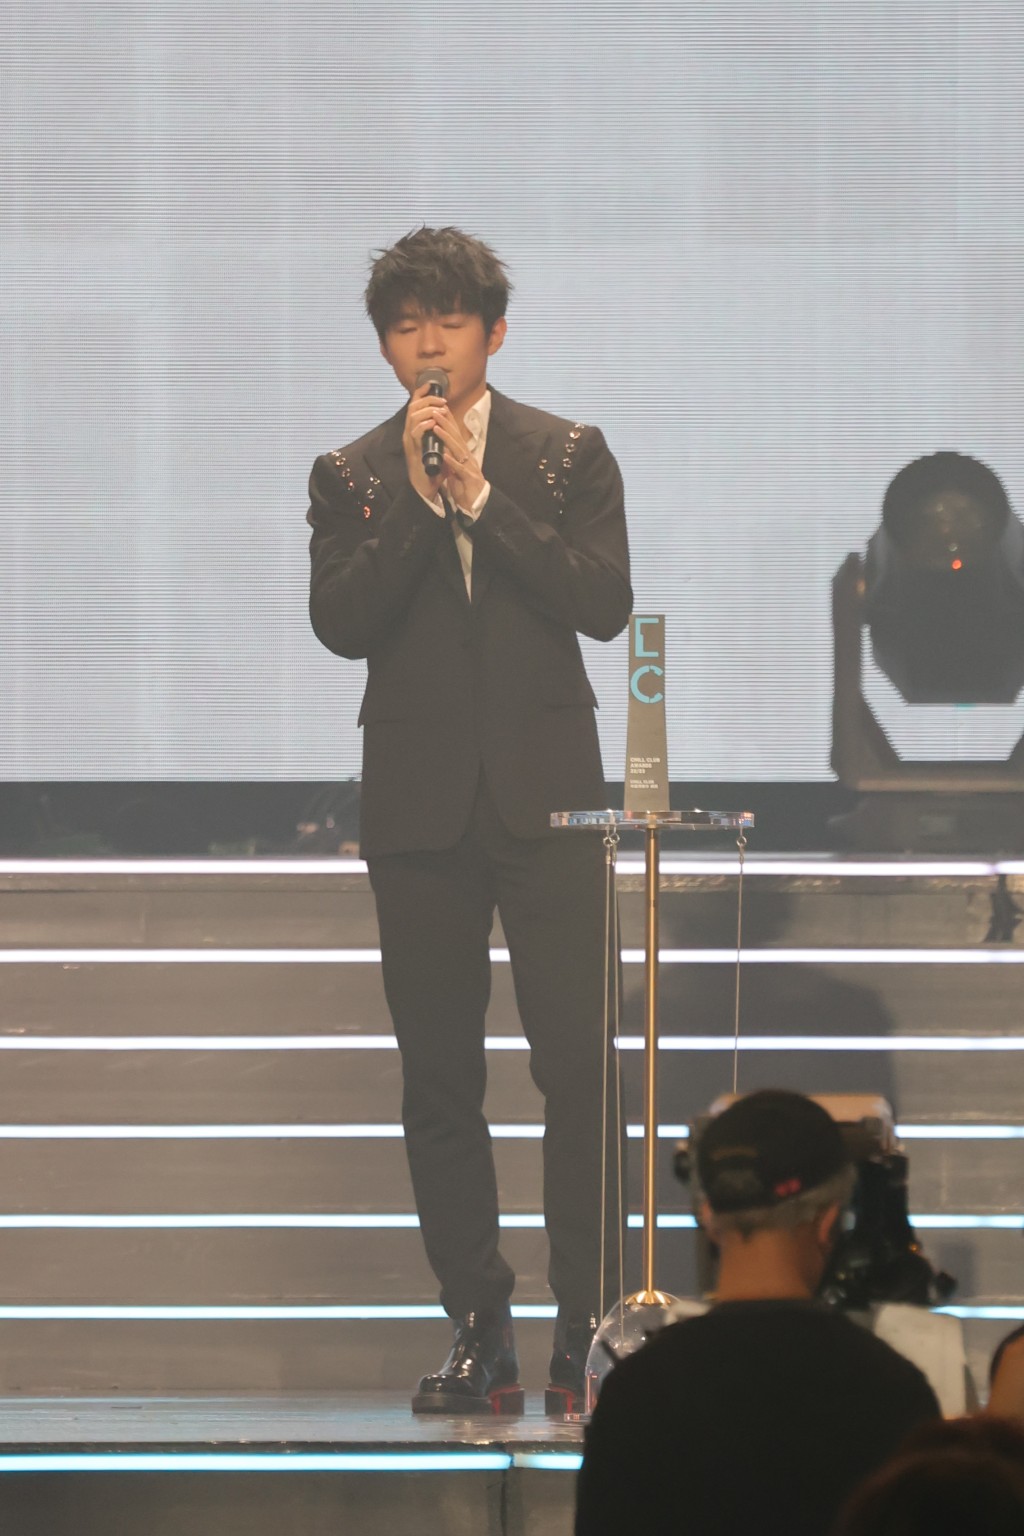 Ian奪得男歌手銅獎，主要多謝製作團隊及MIRROR。